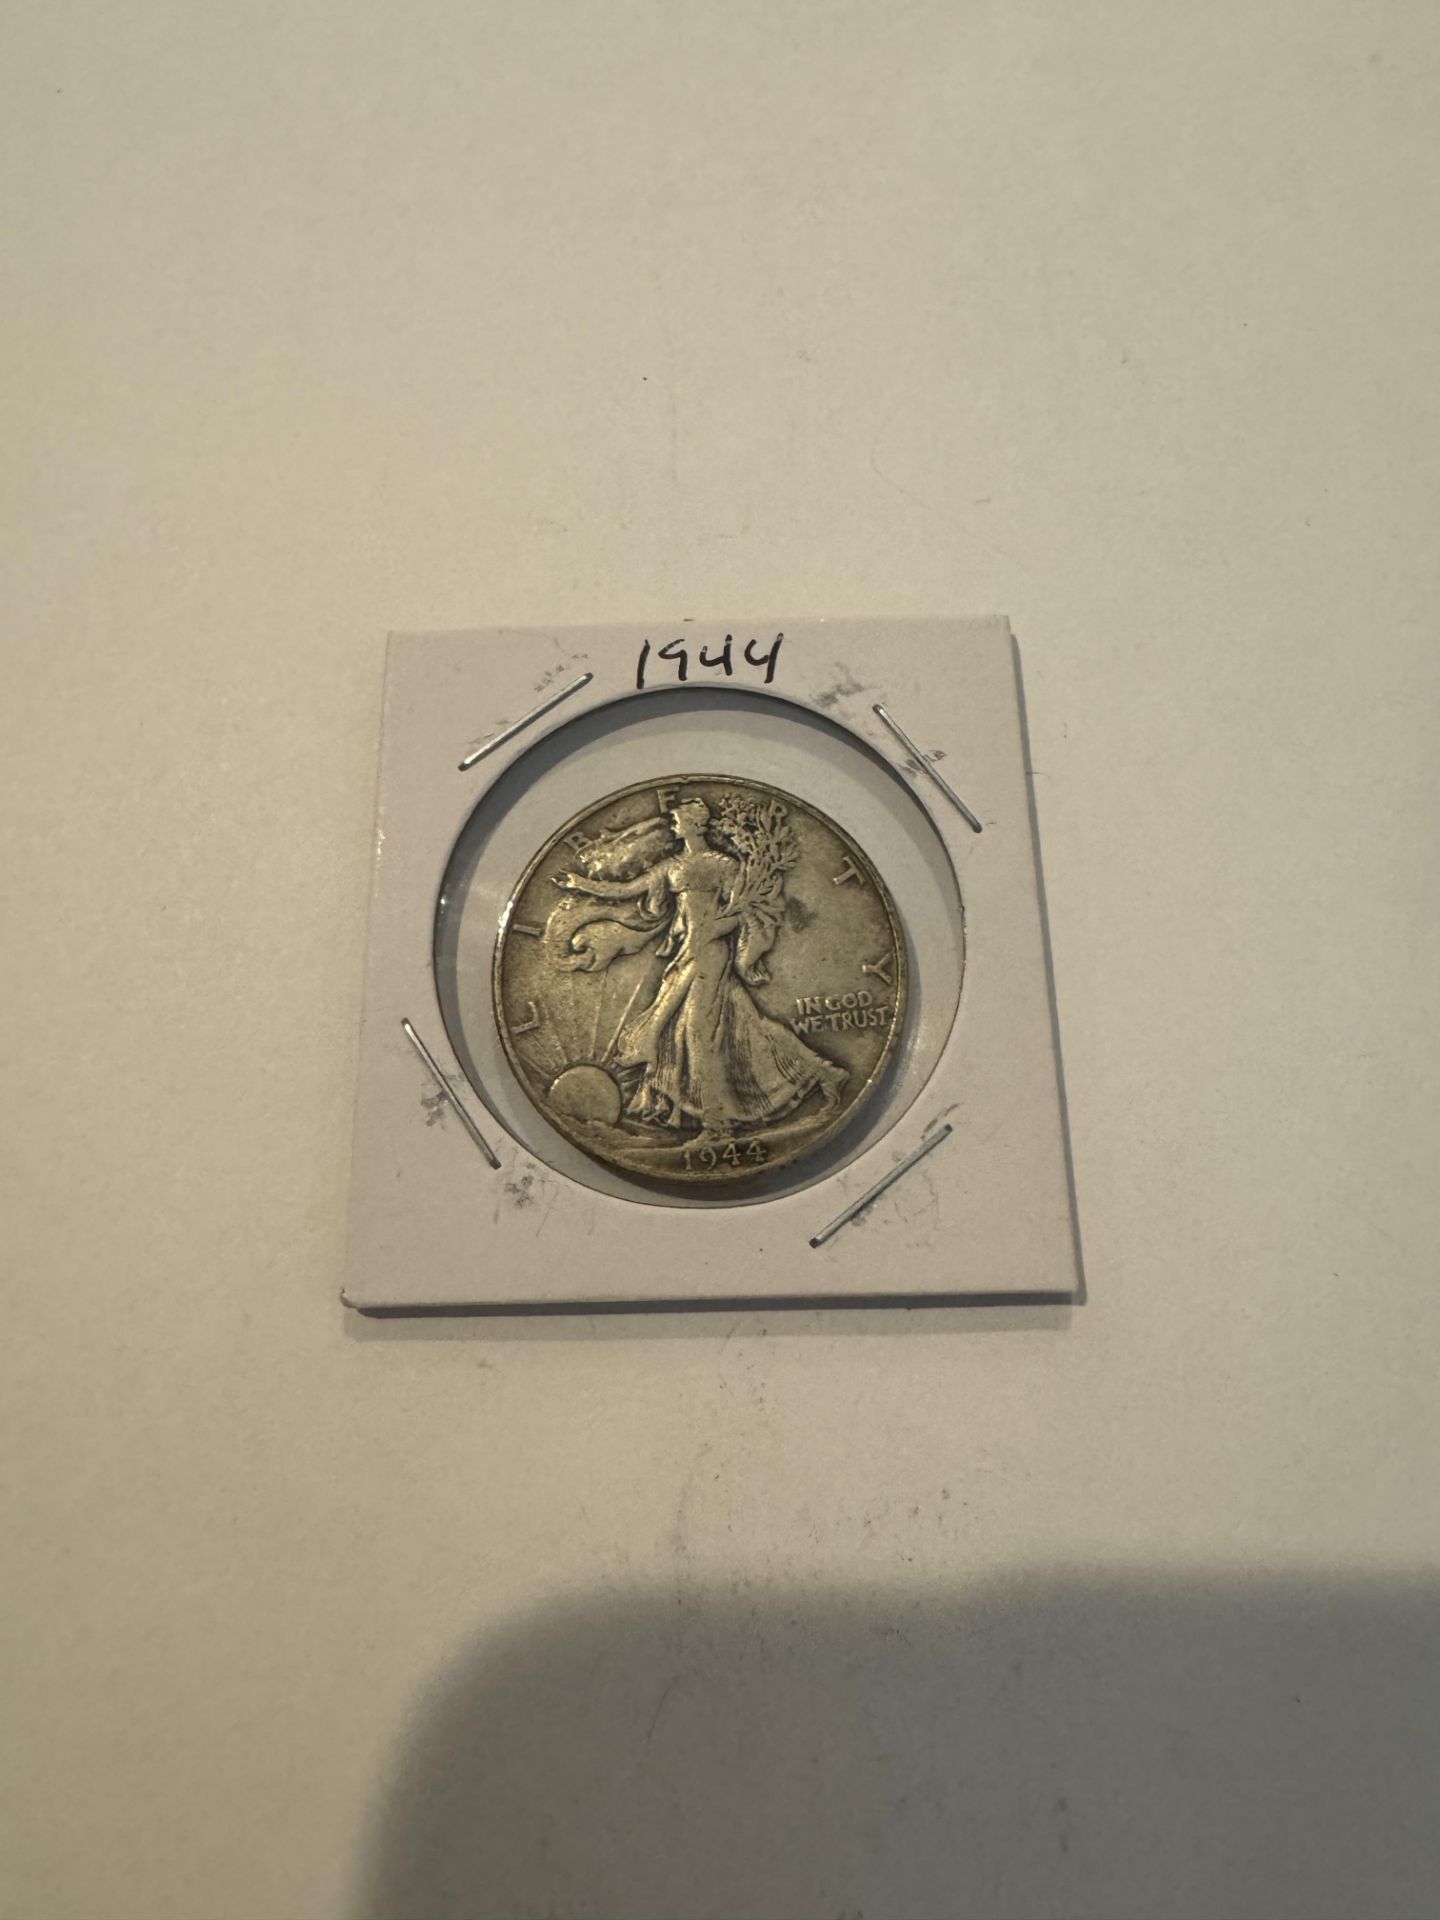 US Half-dollar silver coin 1944